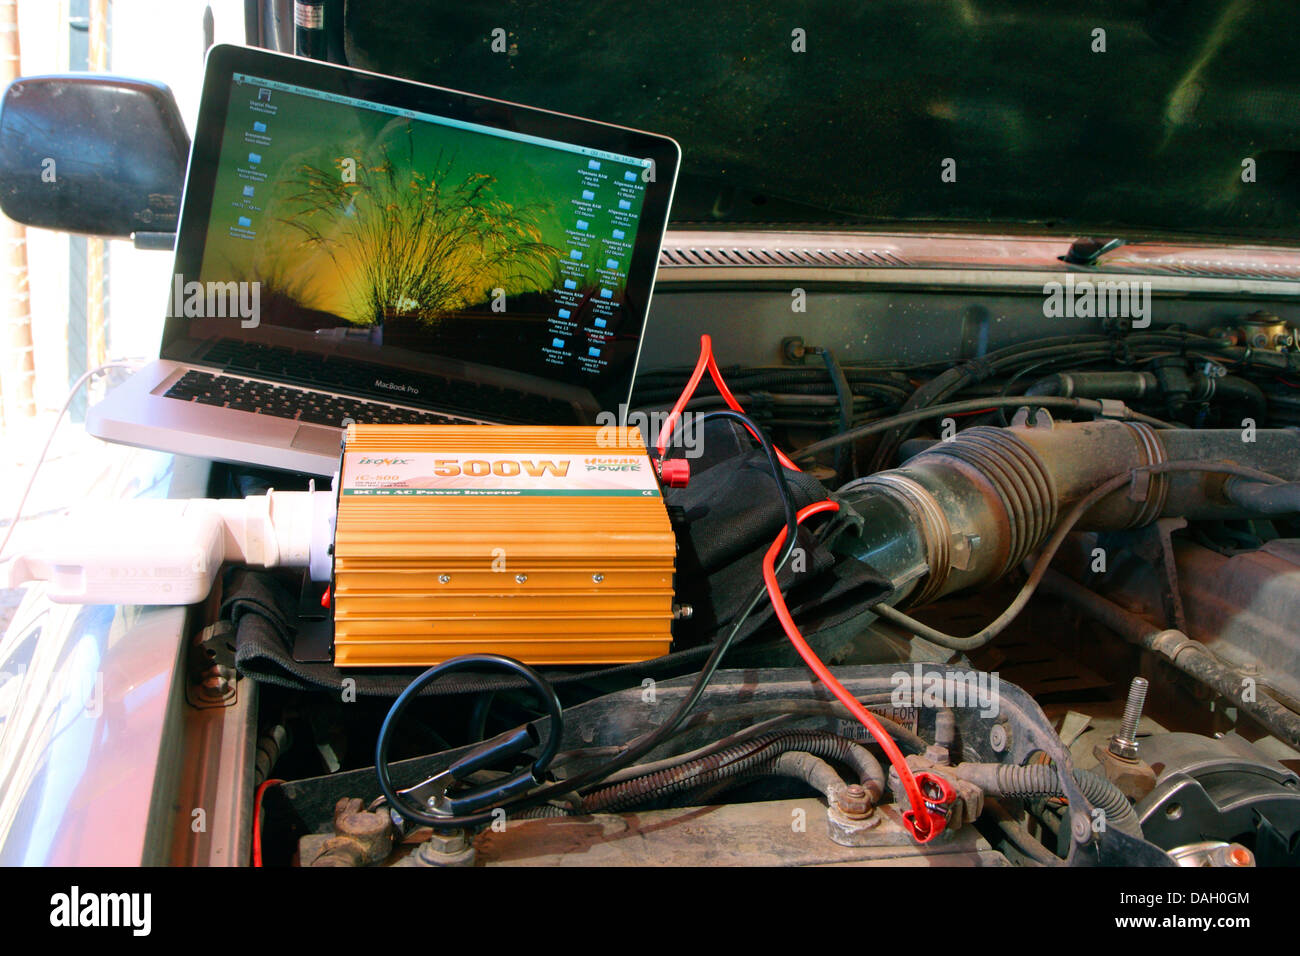 charging a laptop at a car battery in the Kalahari desert, South Africa  Stock Photo - Alamy